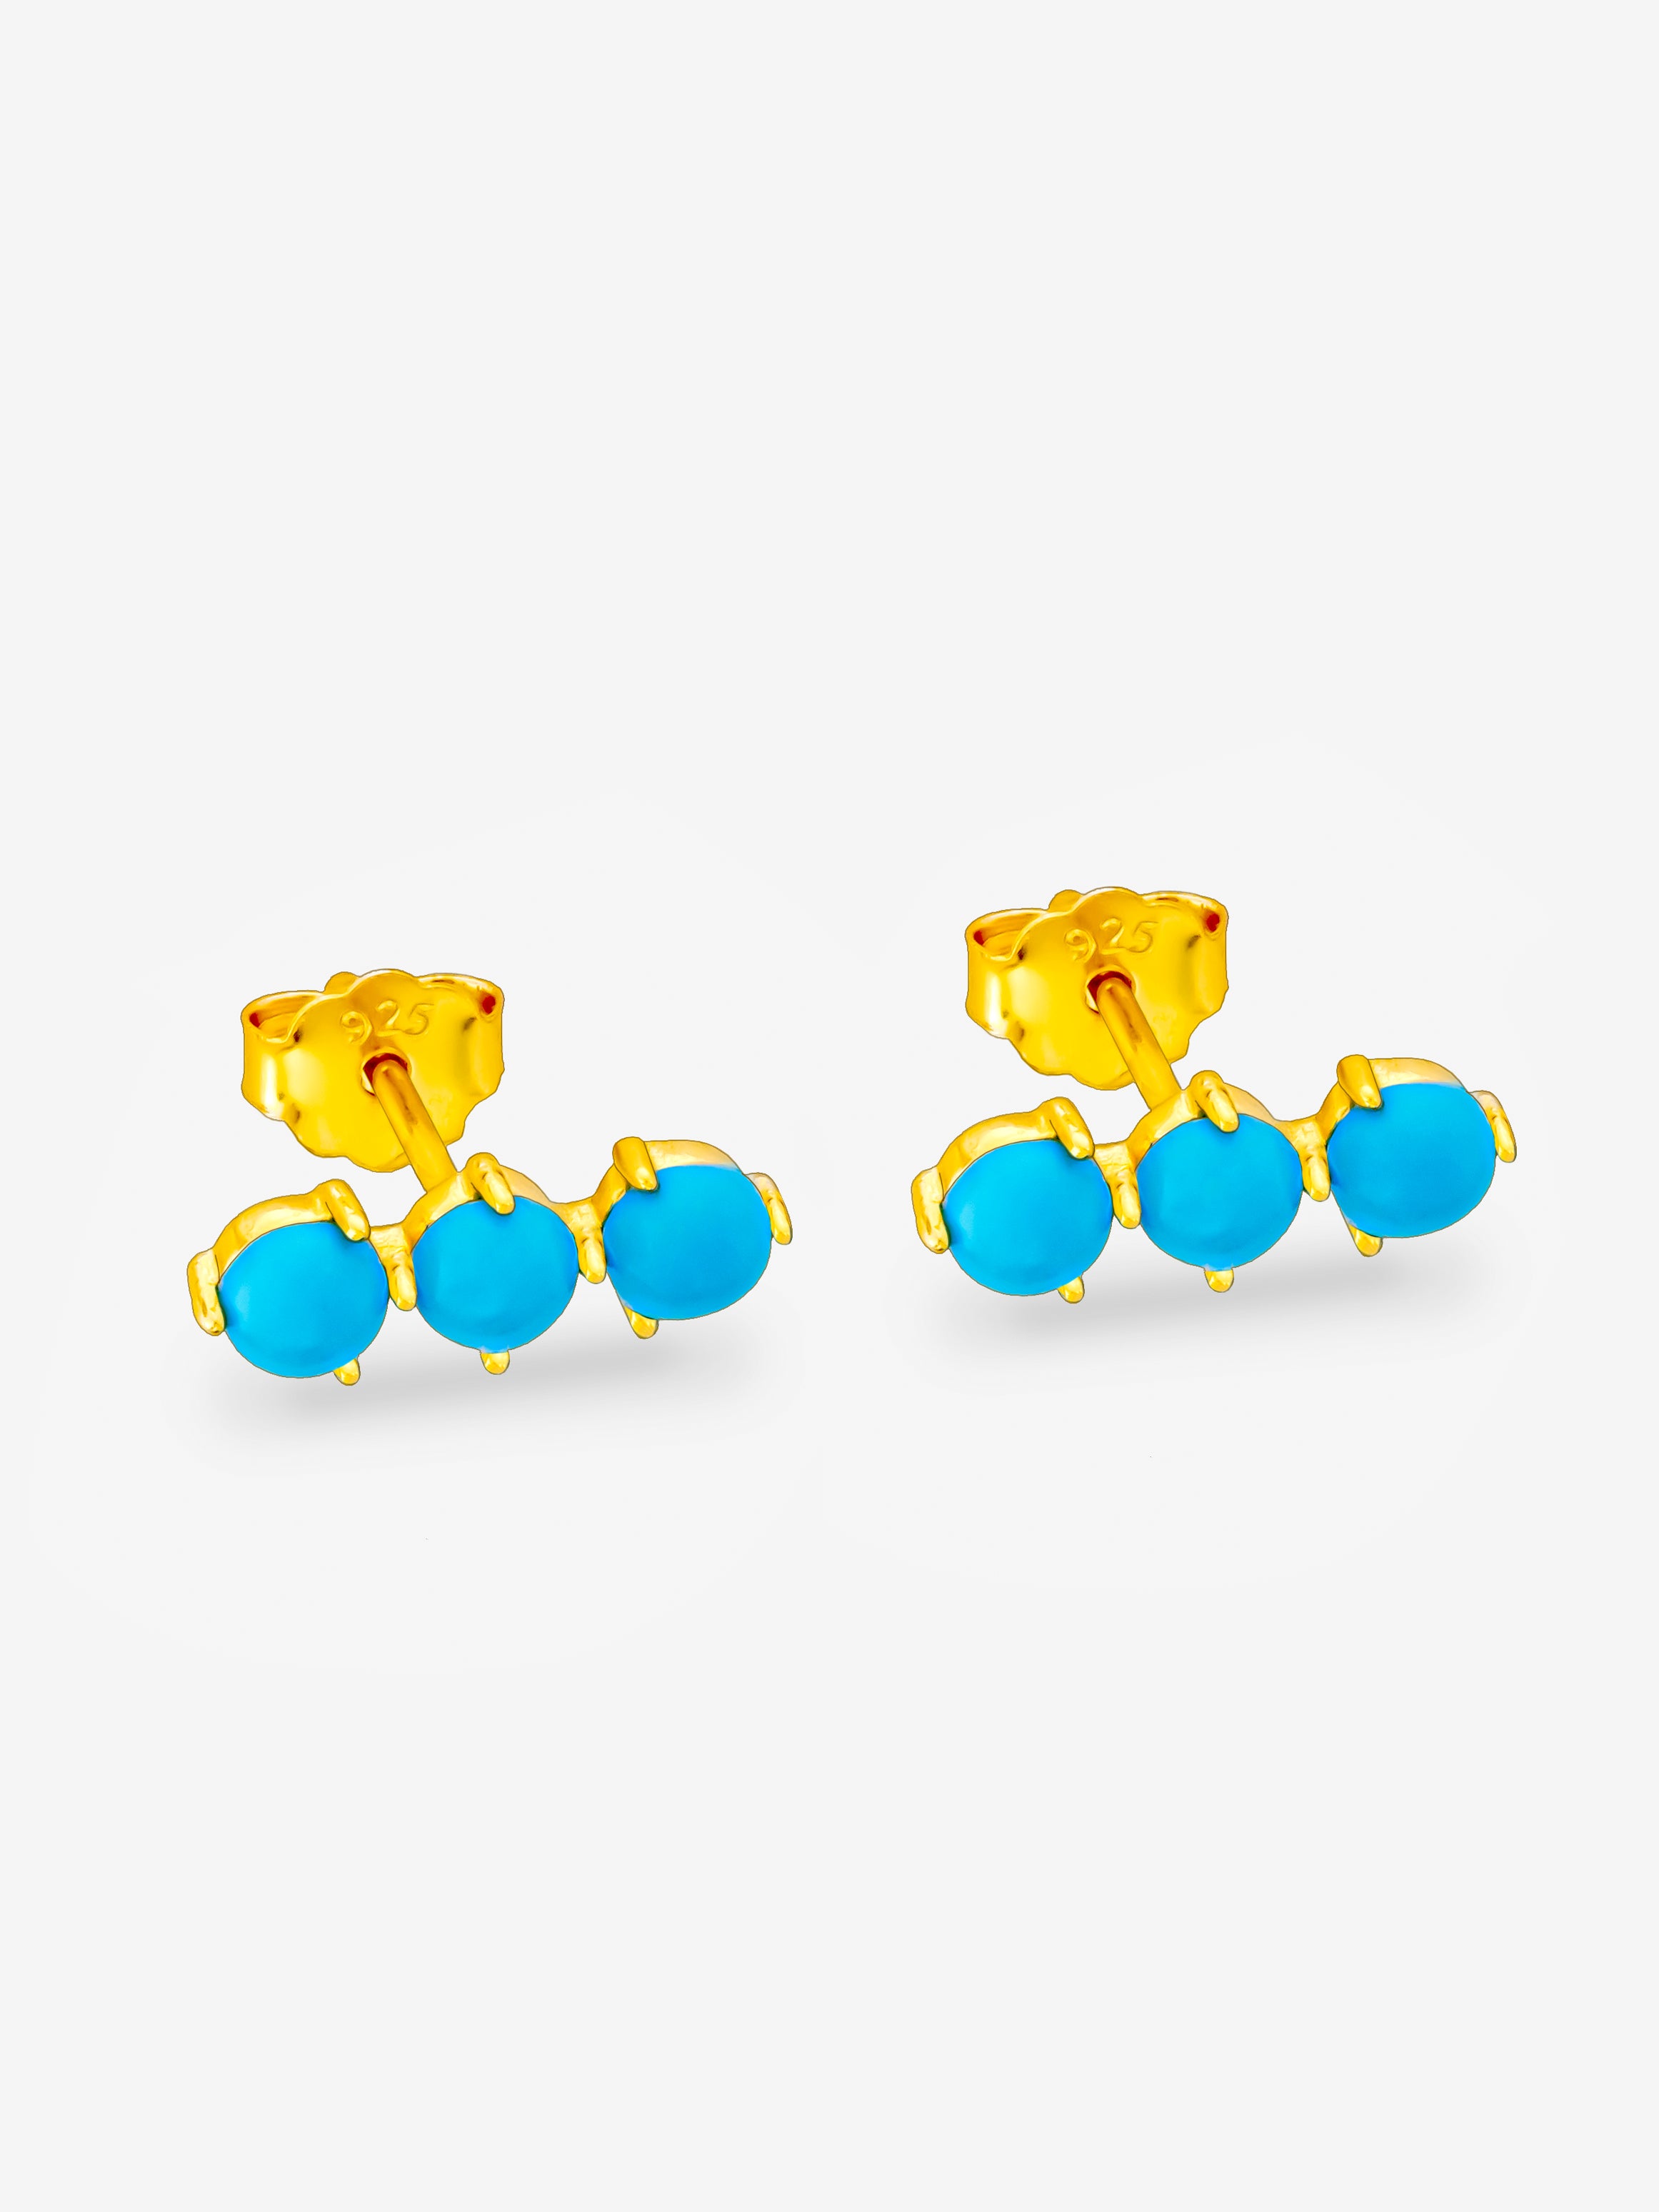 Gold Turquoise Stud Earrings